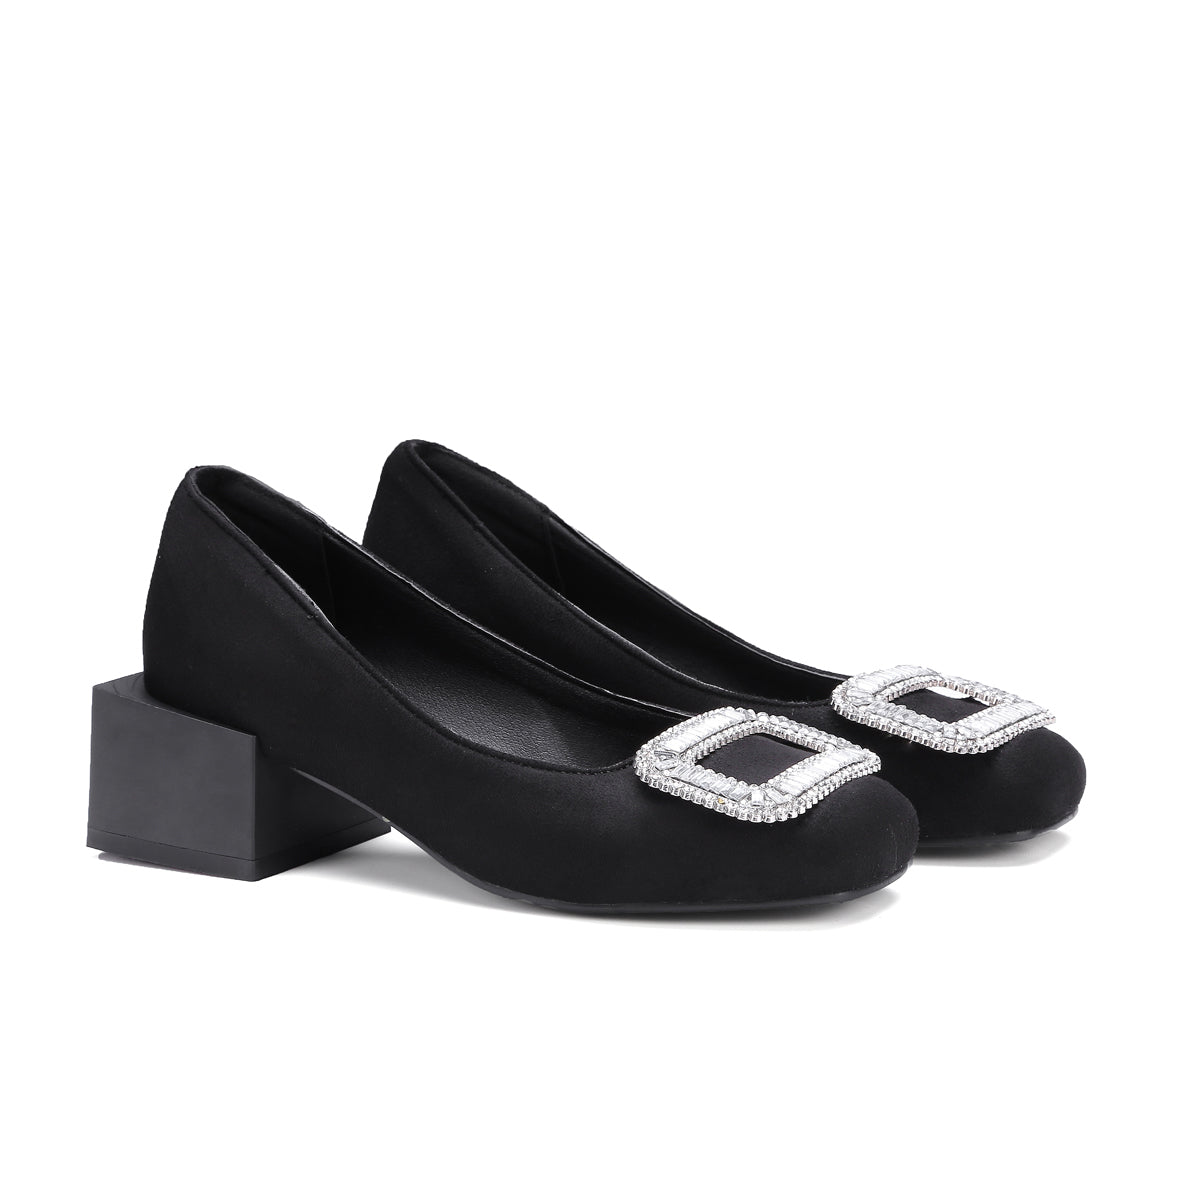 Bigsizeheels Women's square toe suede platform shoes - Black freeshipping - bigsizeheel®-size5-size15 -All Plus Sizes Available!